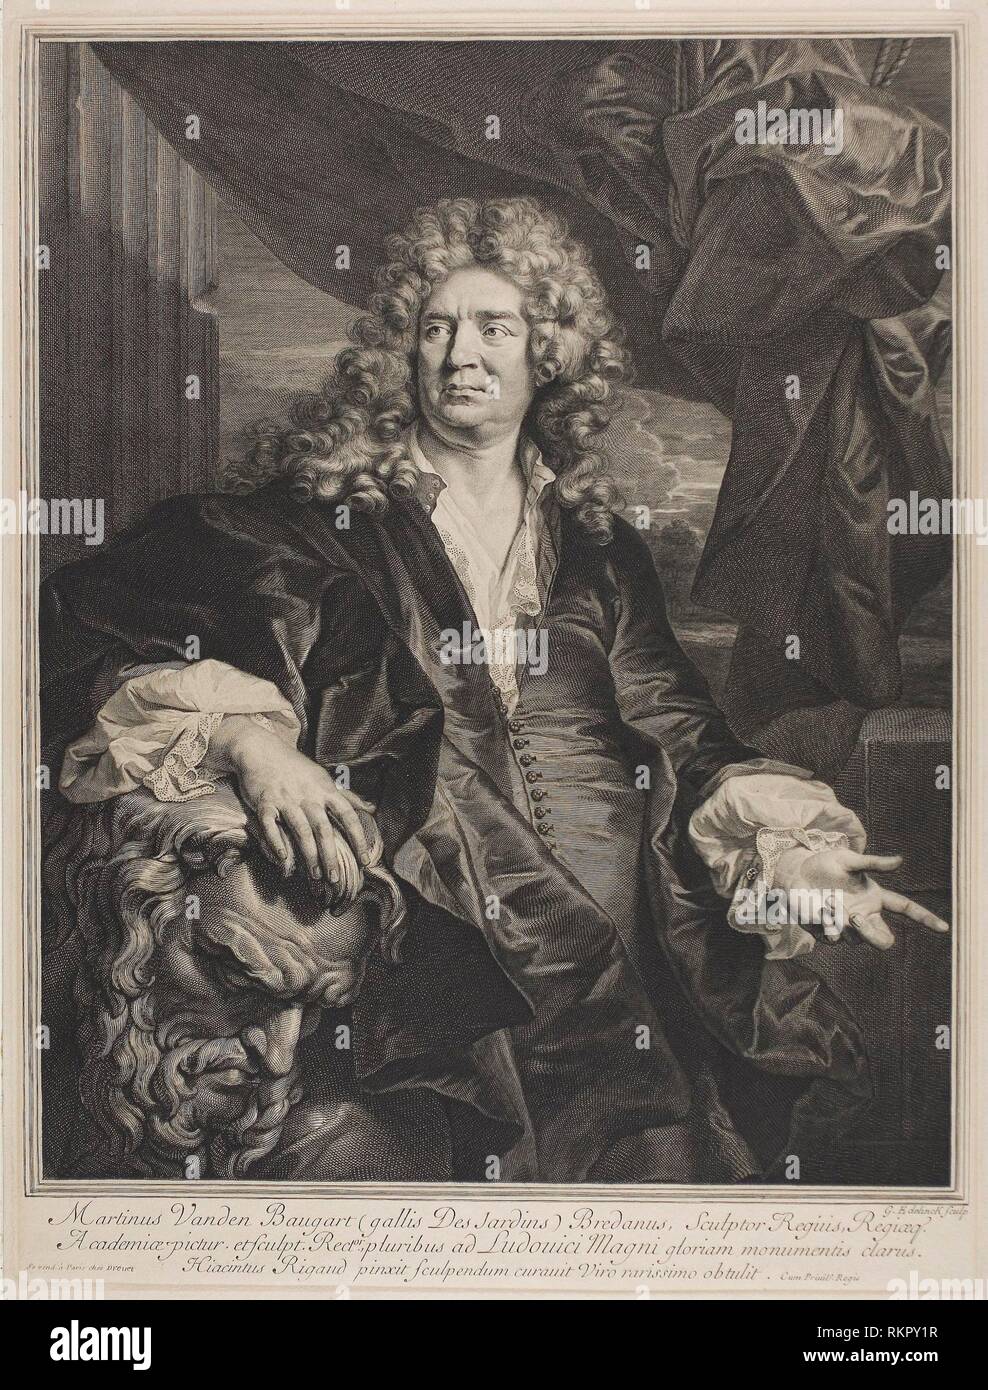 Martin Vanden Bogaert Desjardins - 1698 - Gérard Edelinck (French, born Flanders, 1640-1707) after Hyacinthe Rigaud (French, 1659-1743) - Artist: Stock Photo